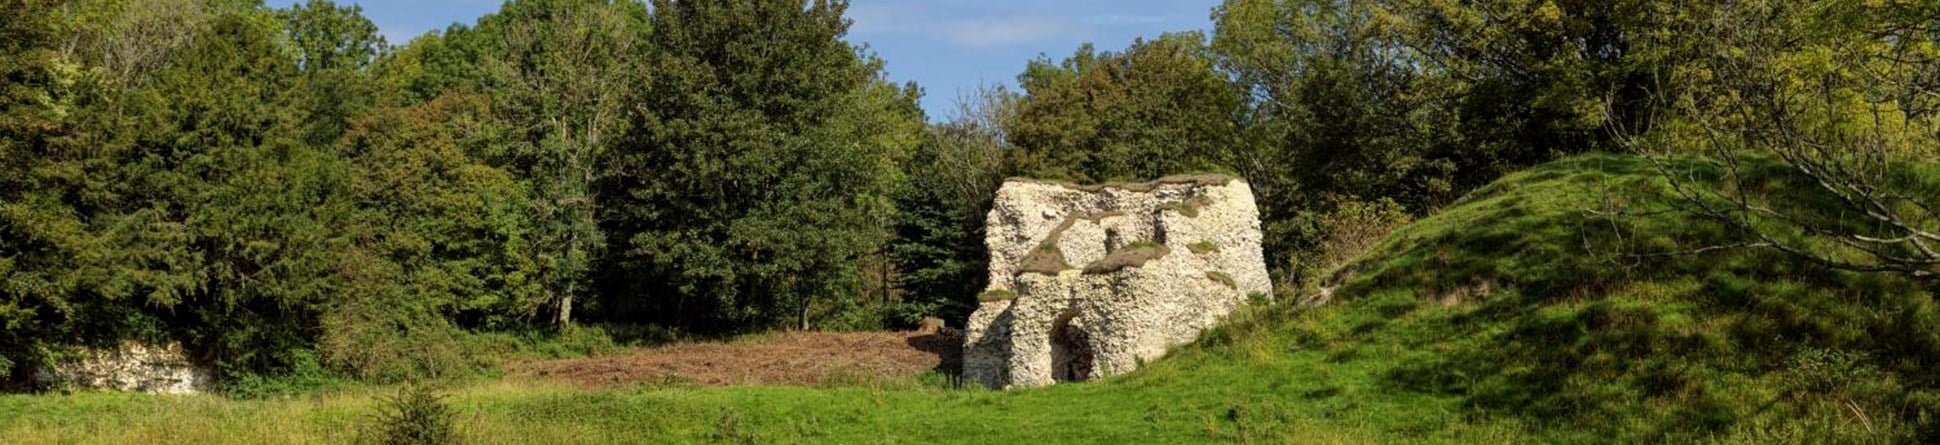 A photo of a stone ruin in a green landscape